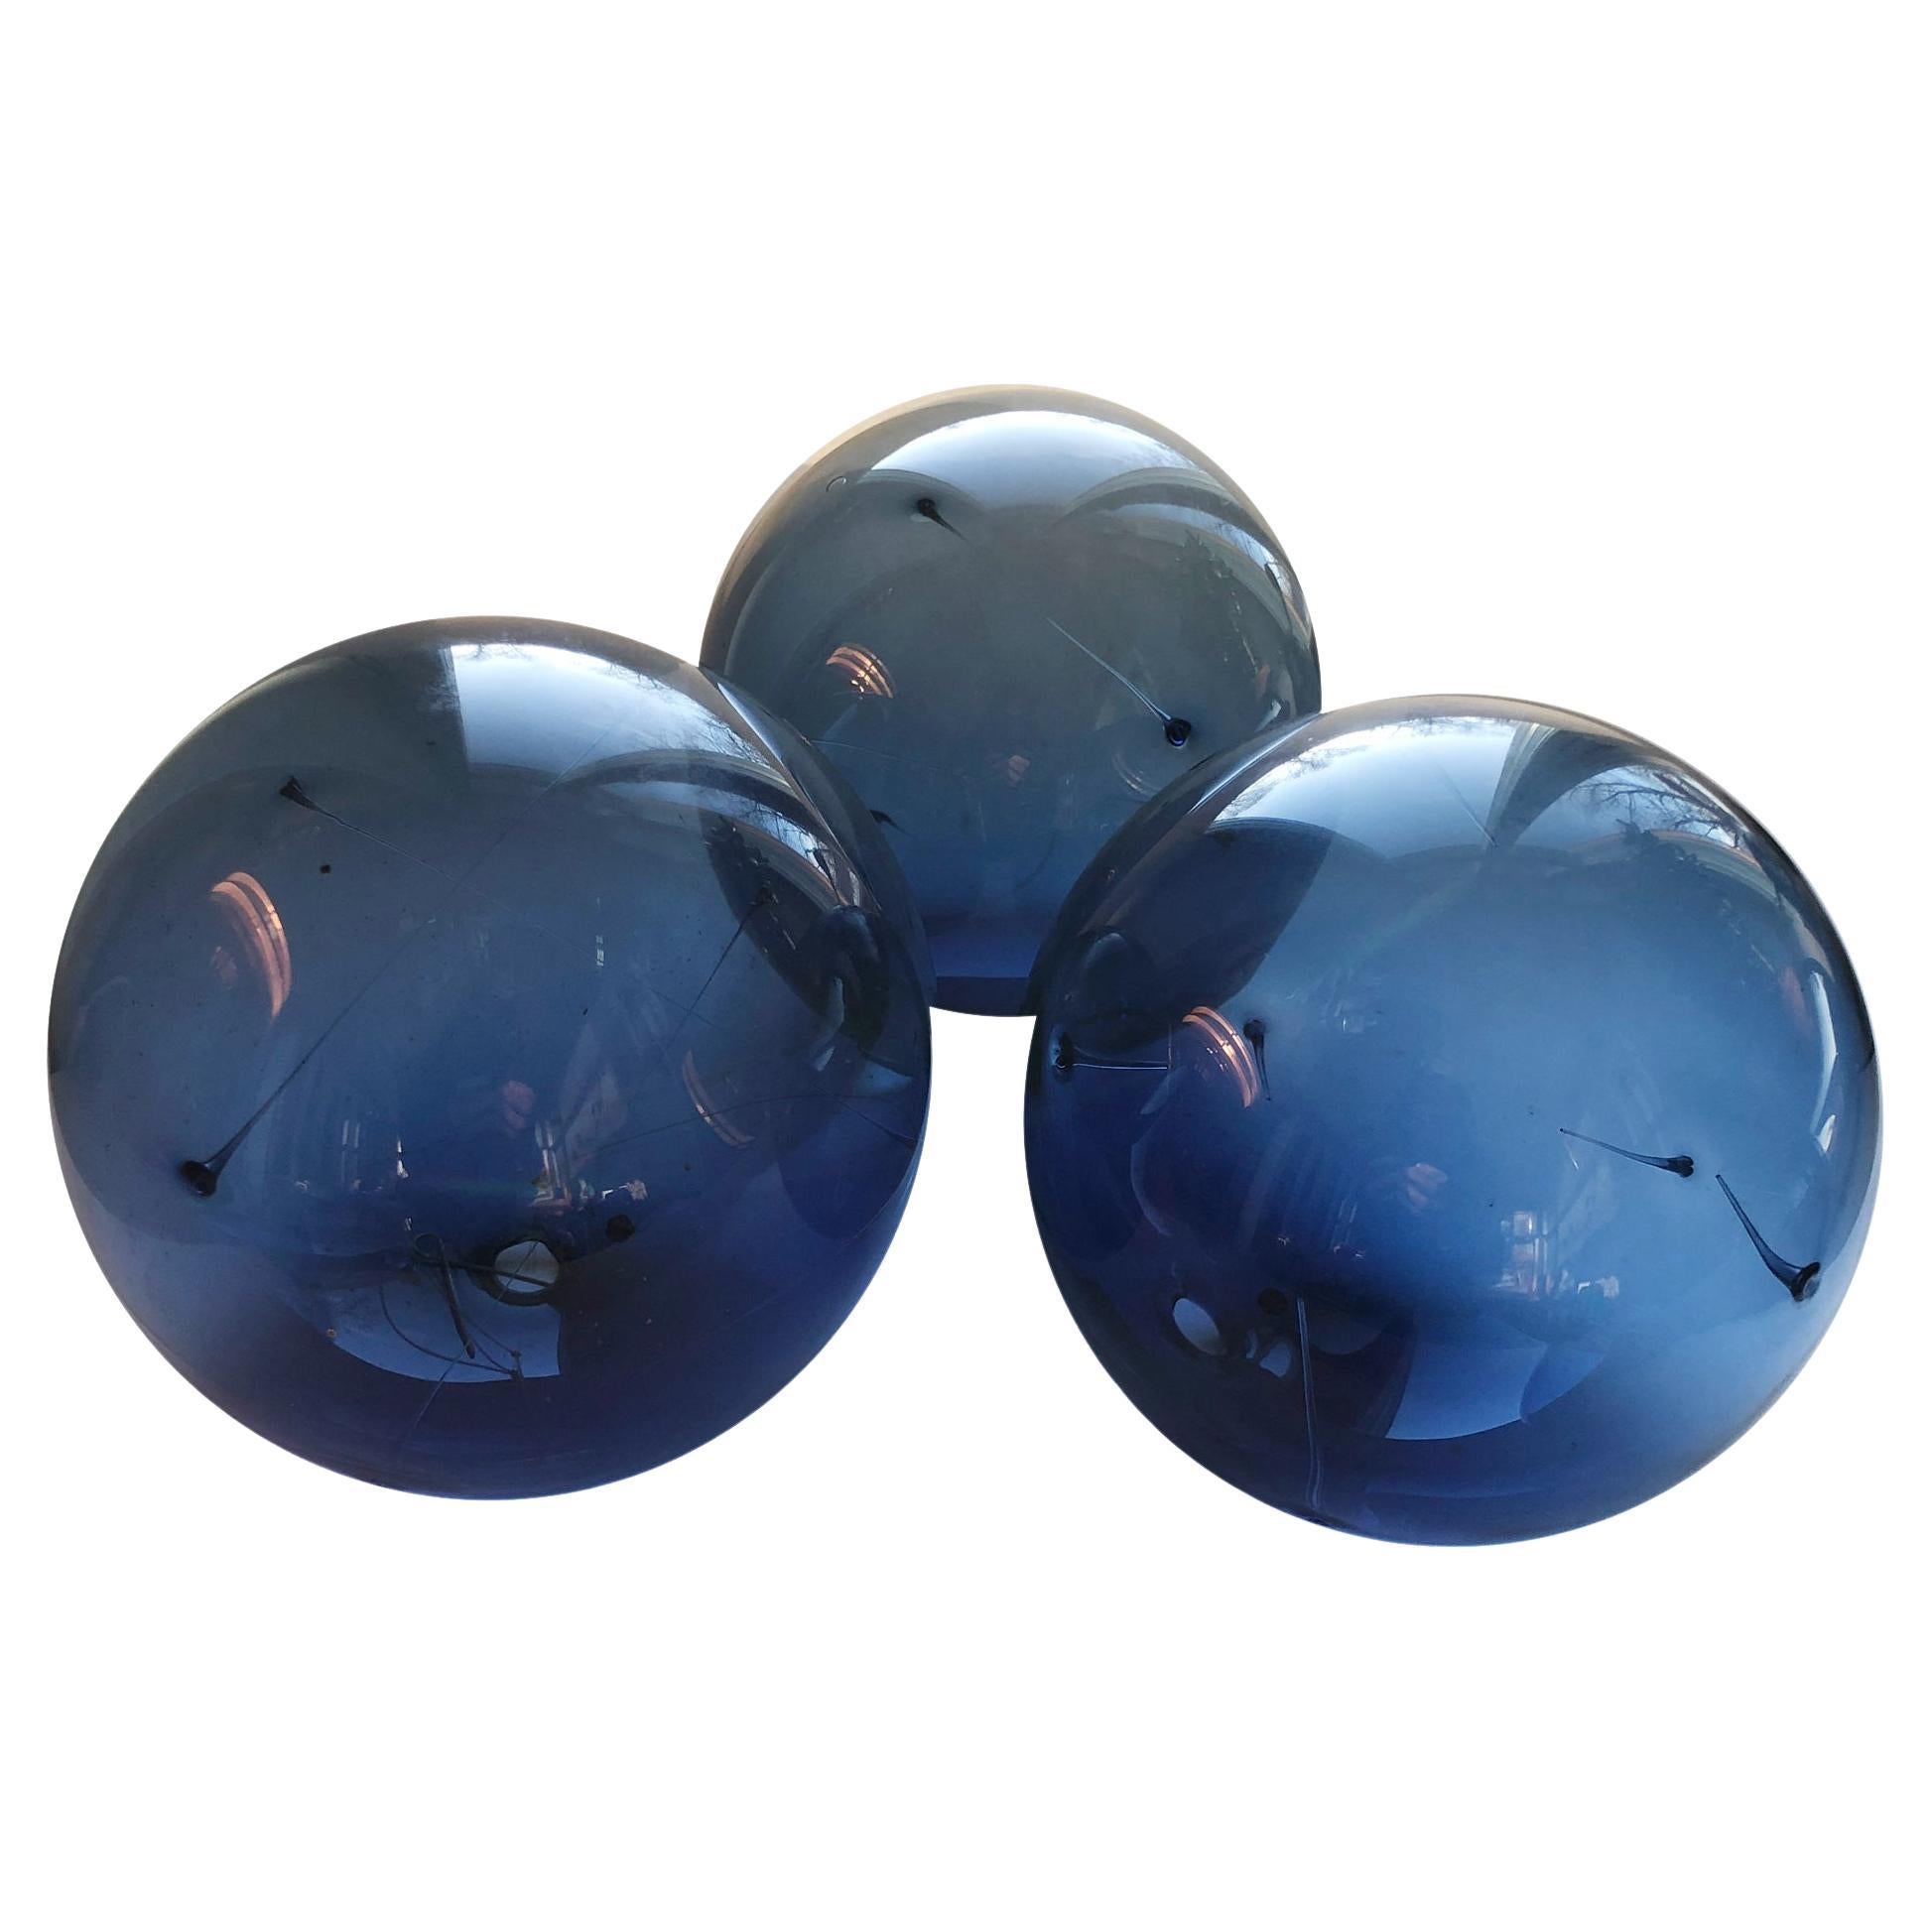 Drei blaue Glaskunstobjekte Solboll/Sonnenball von Timo Sarpaneva Iittala, signiert TS